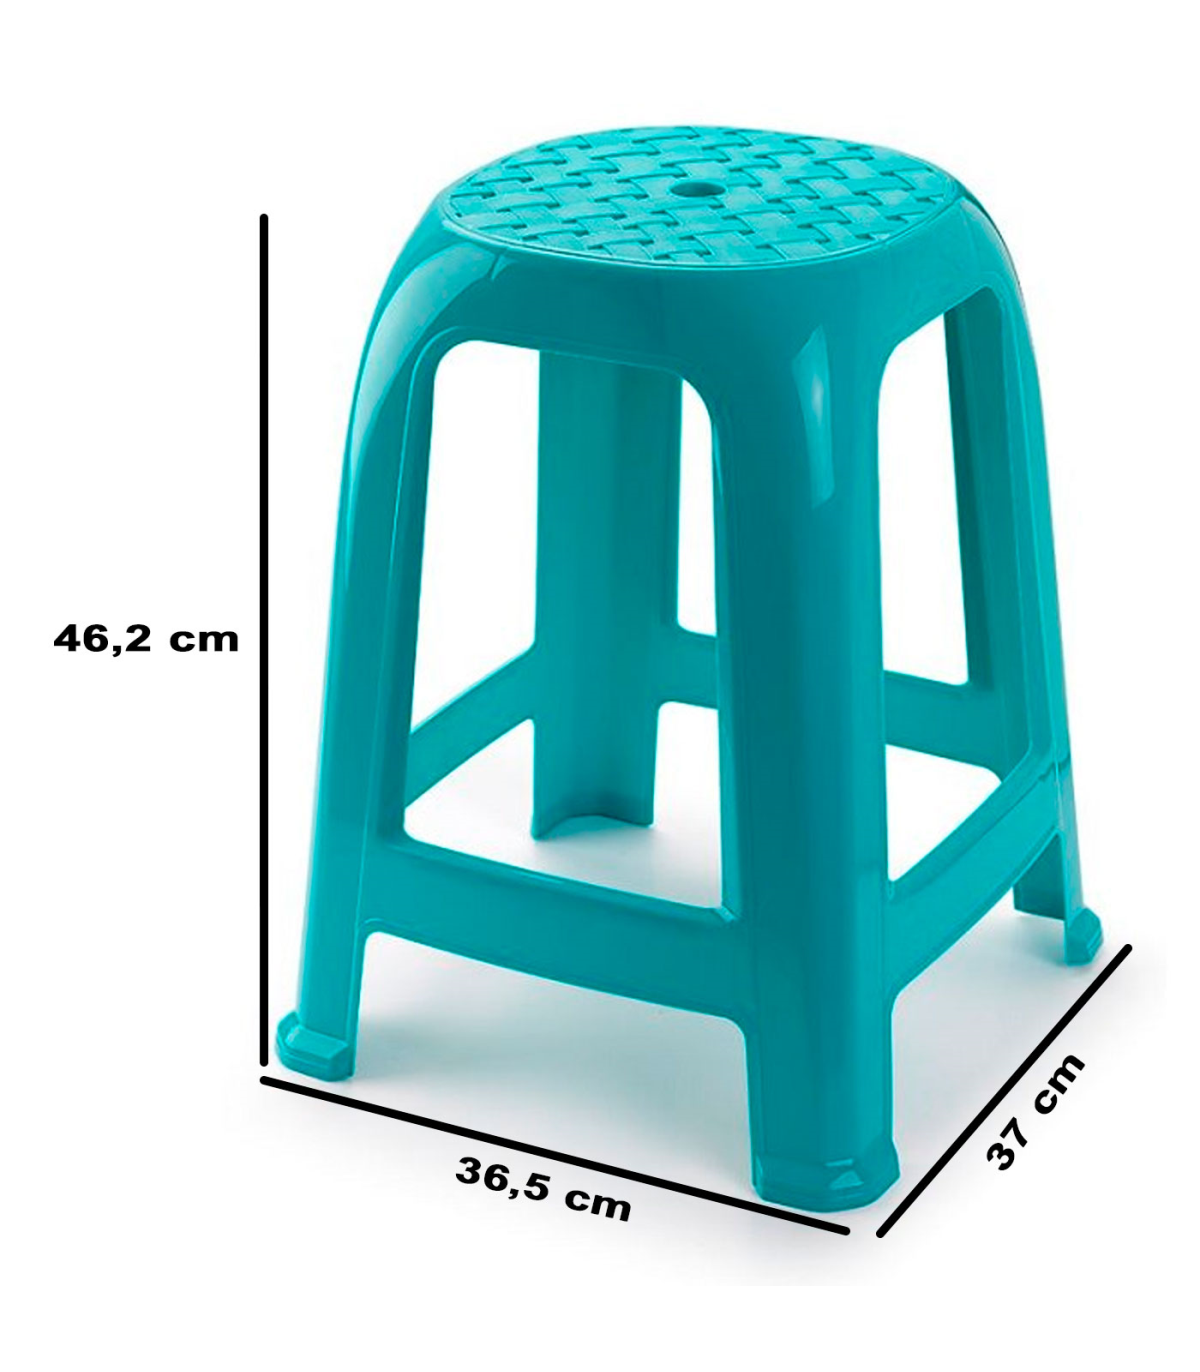 Tradineur - Taburete de plástico con reposapiés, asiento de 26 x